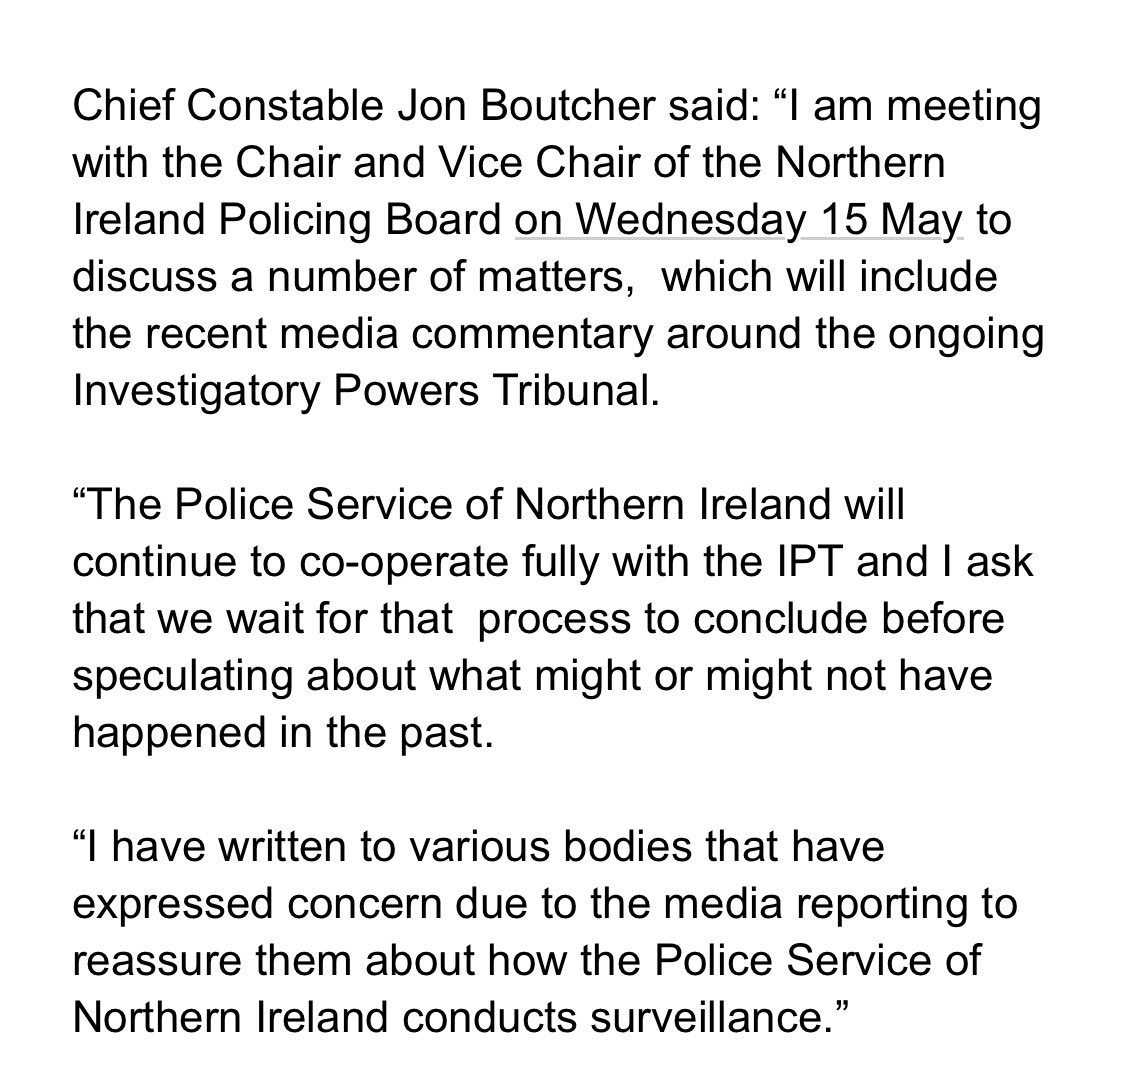 Statement from @ChiefConPSNI re surveillance of journalists